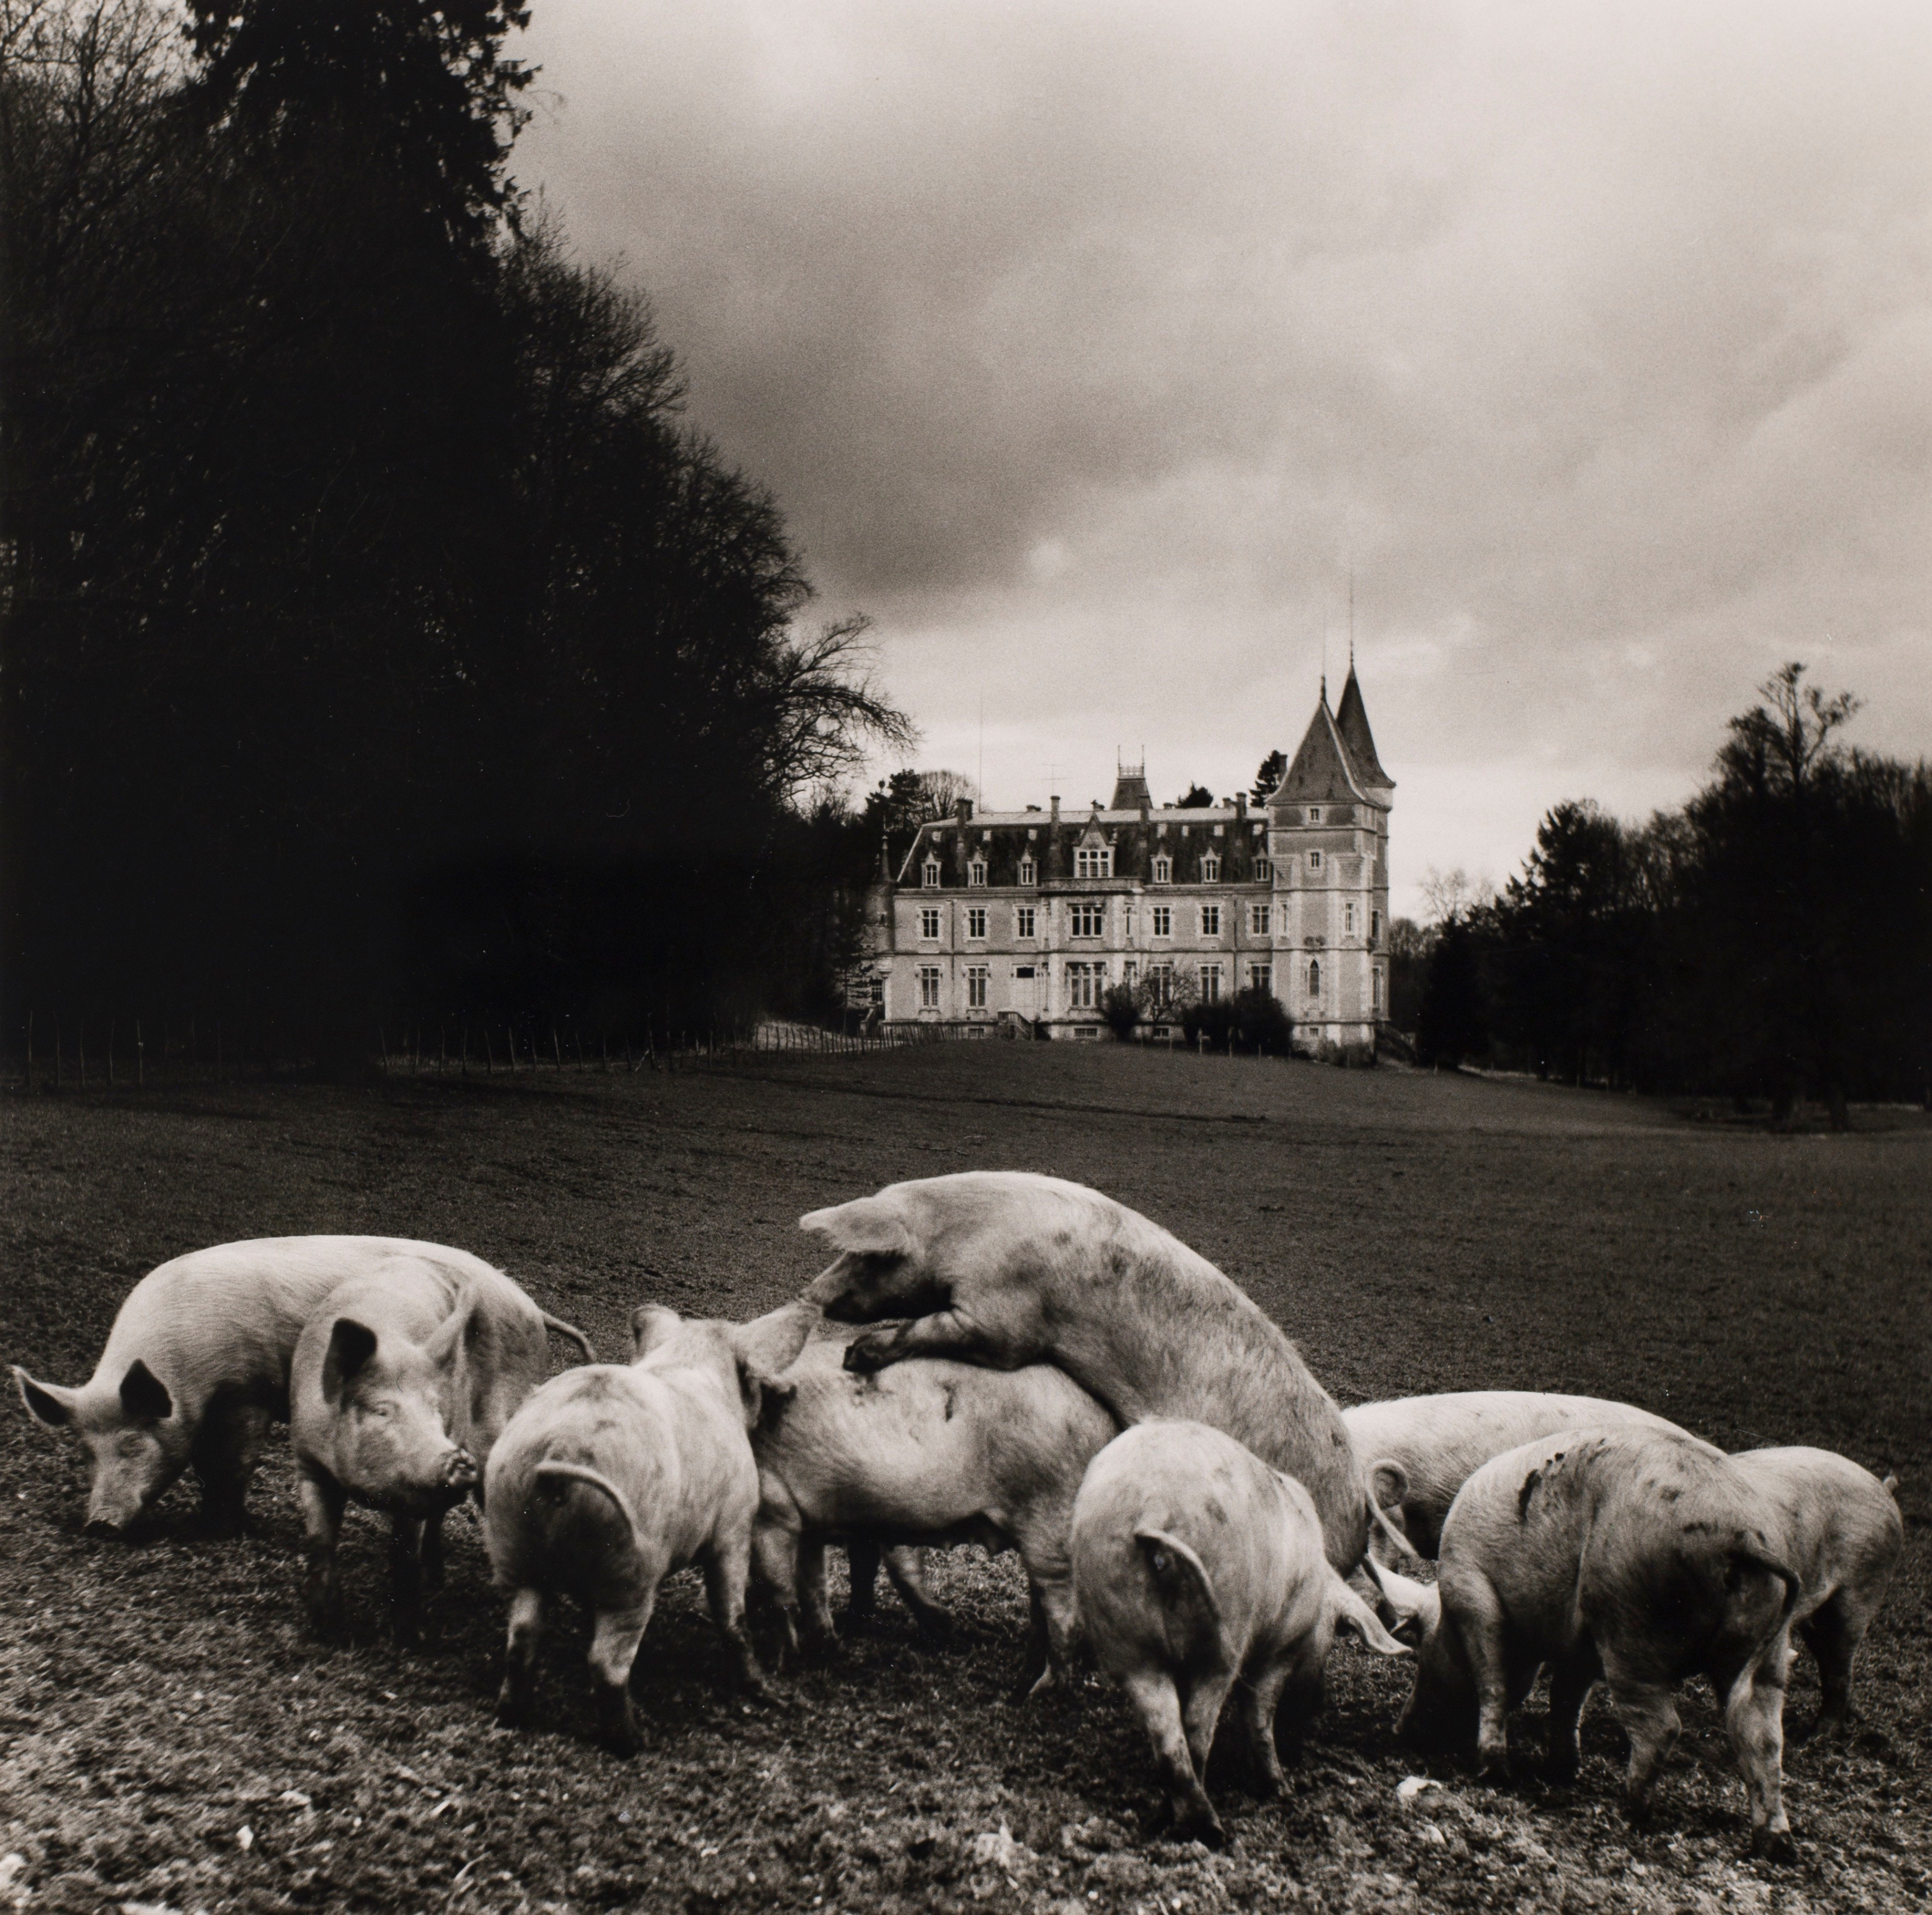 Philippe Salaun (1943-)  Le vie de Chateau, 1973  Gelatin silver print  16 x 12 inches (paper), black and white photography